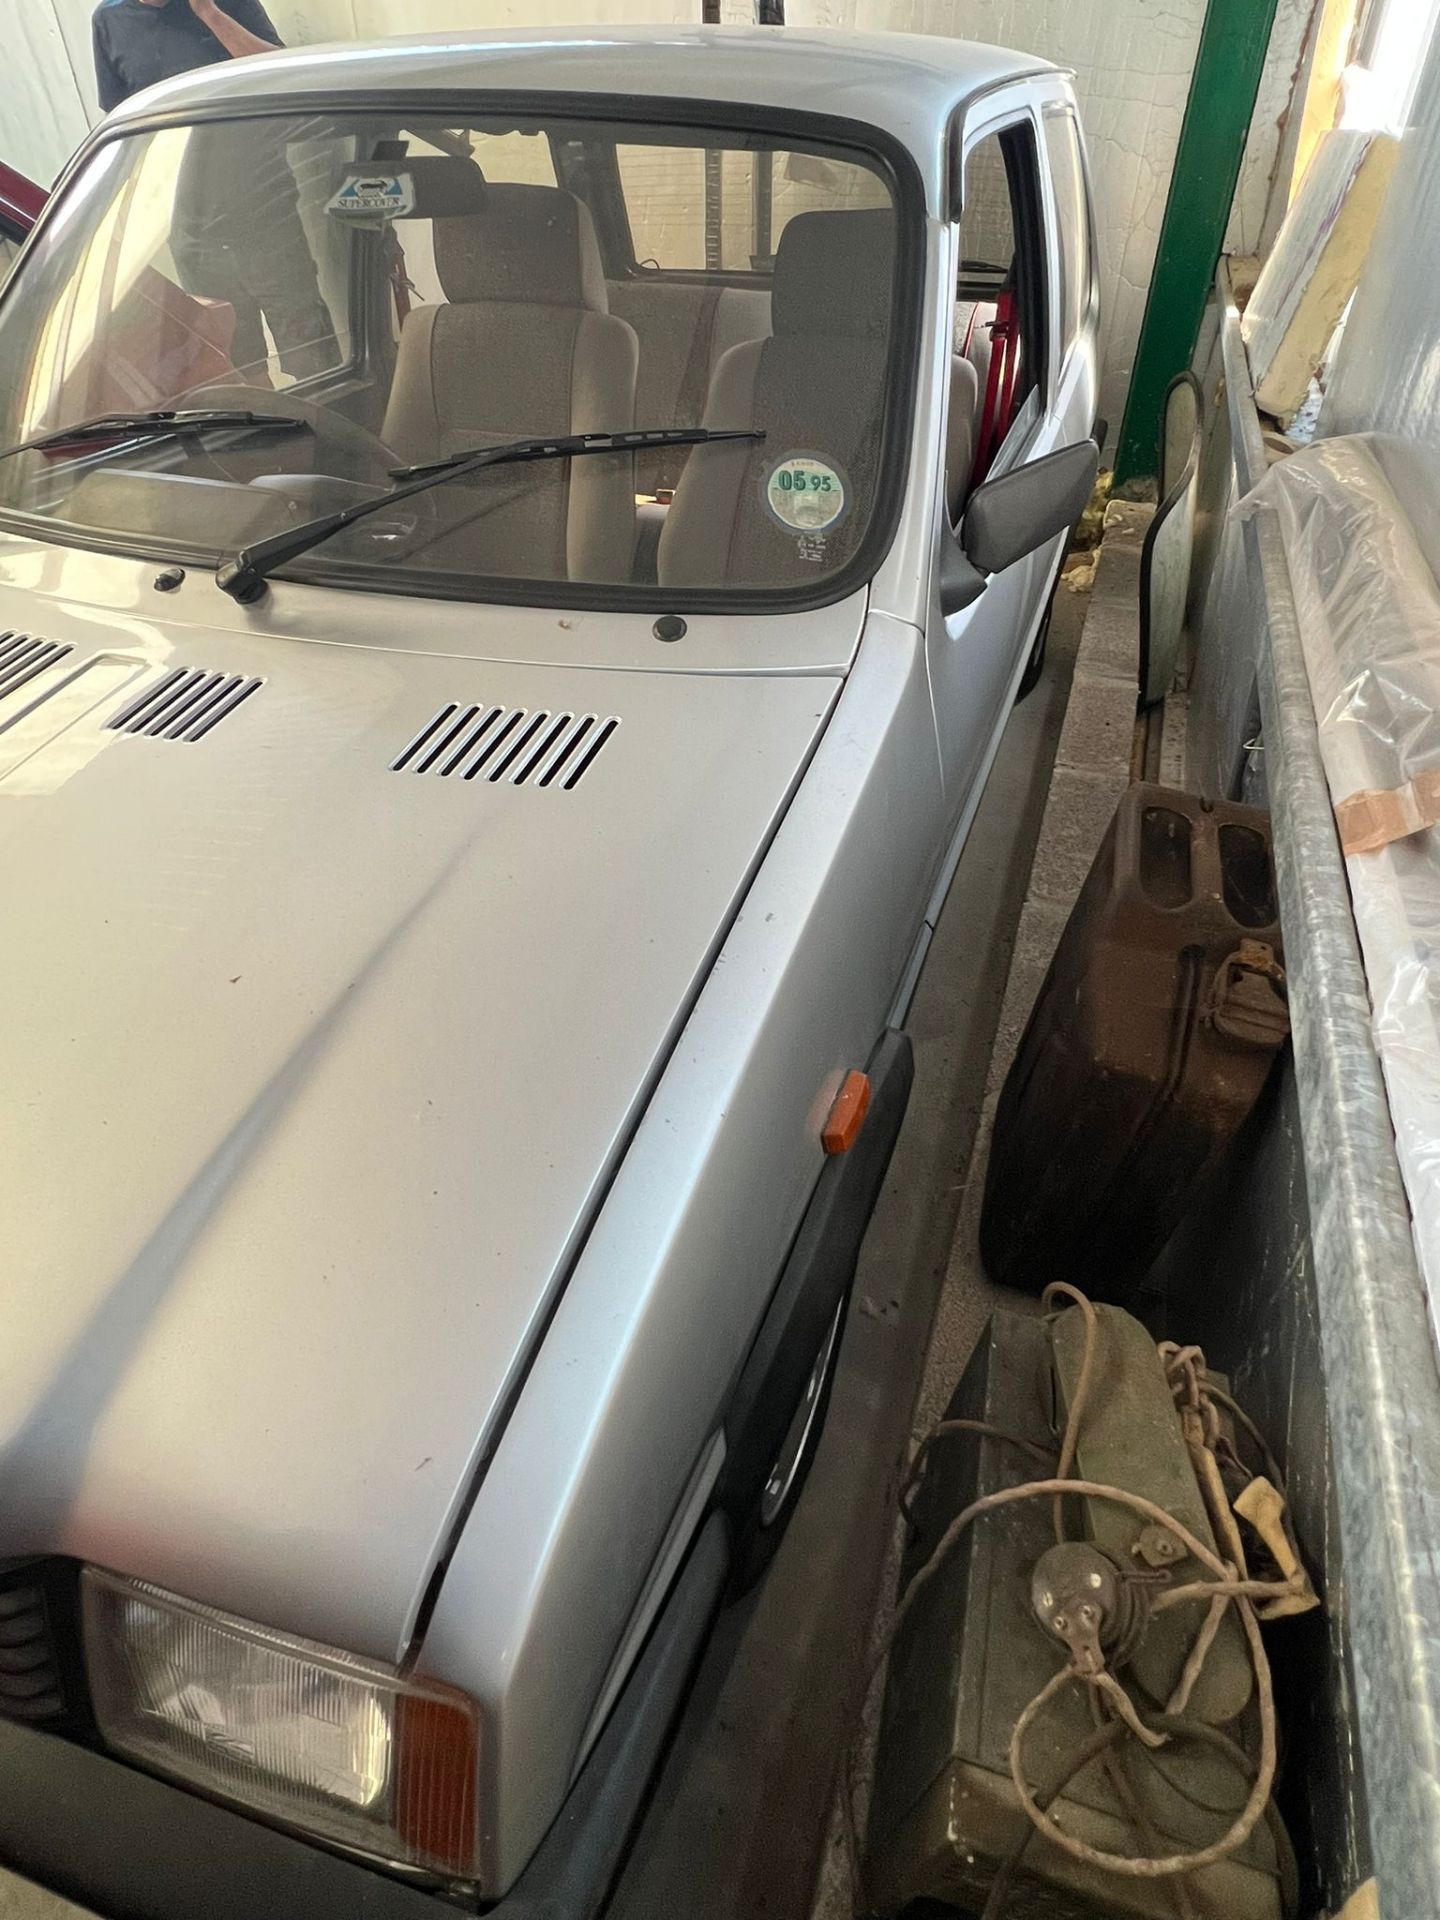 Rover MG Metro Turbo c1984 - Image 3 of 22